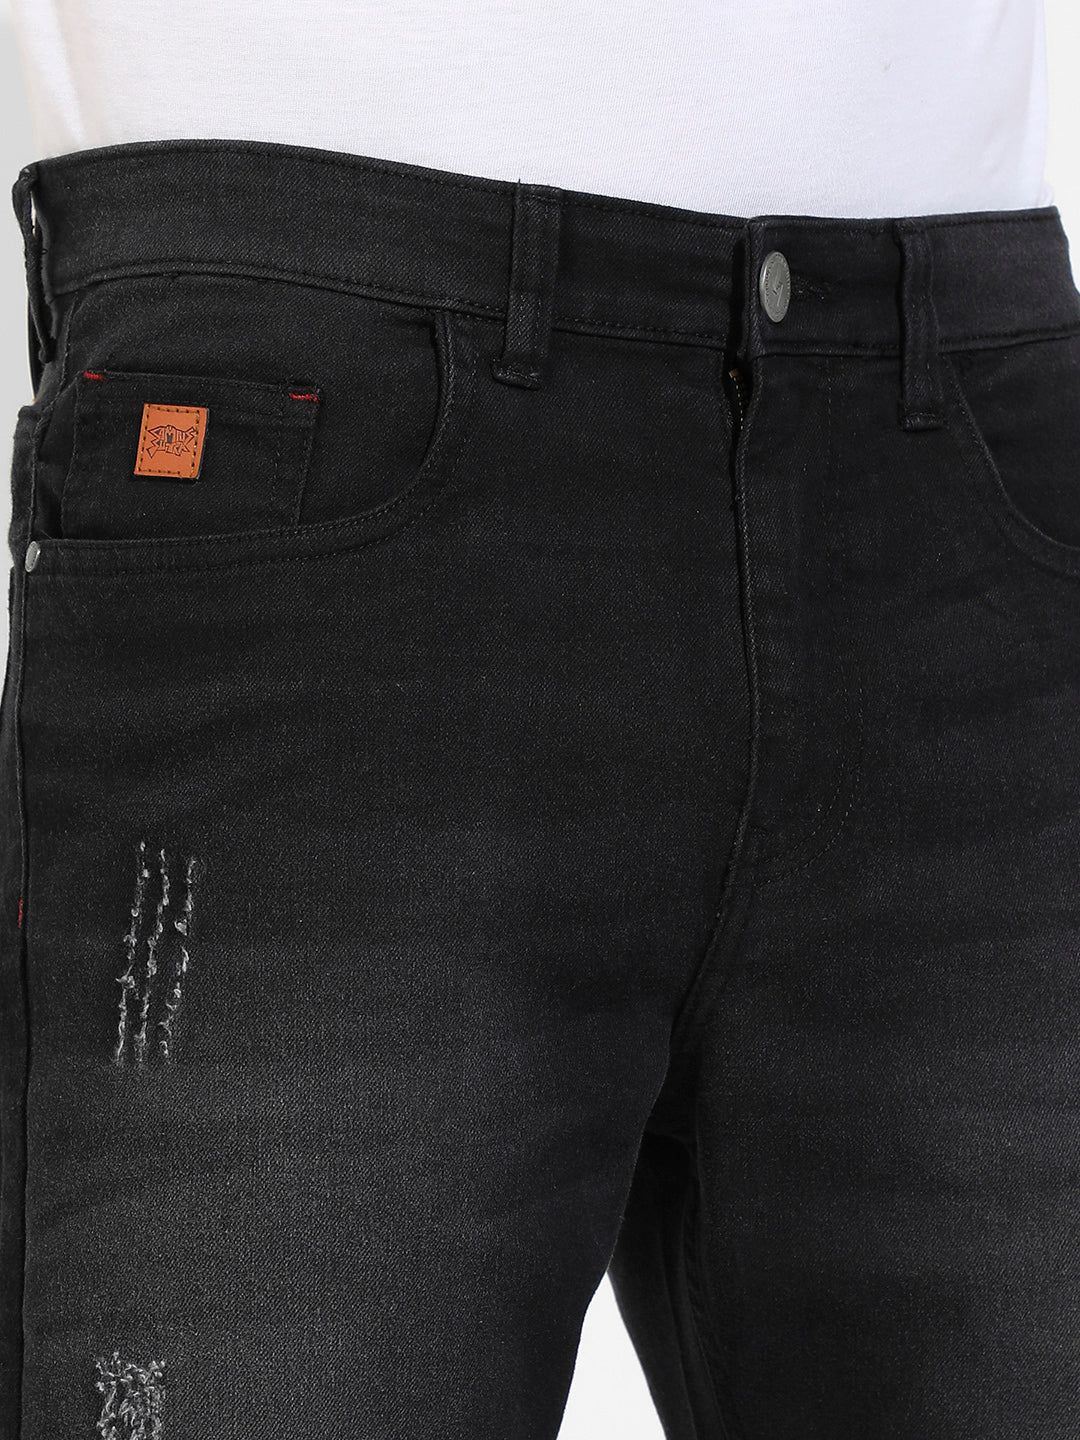 Men's Black Distressed Effect Denim Shorts